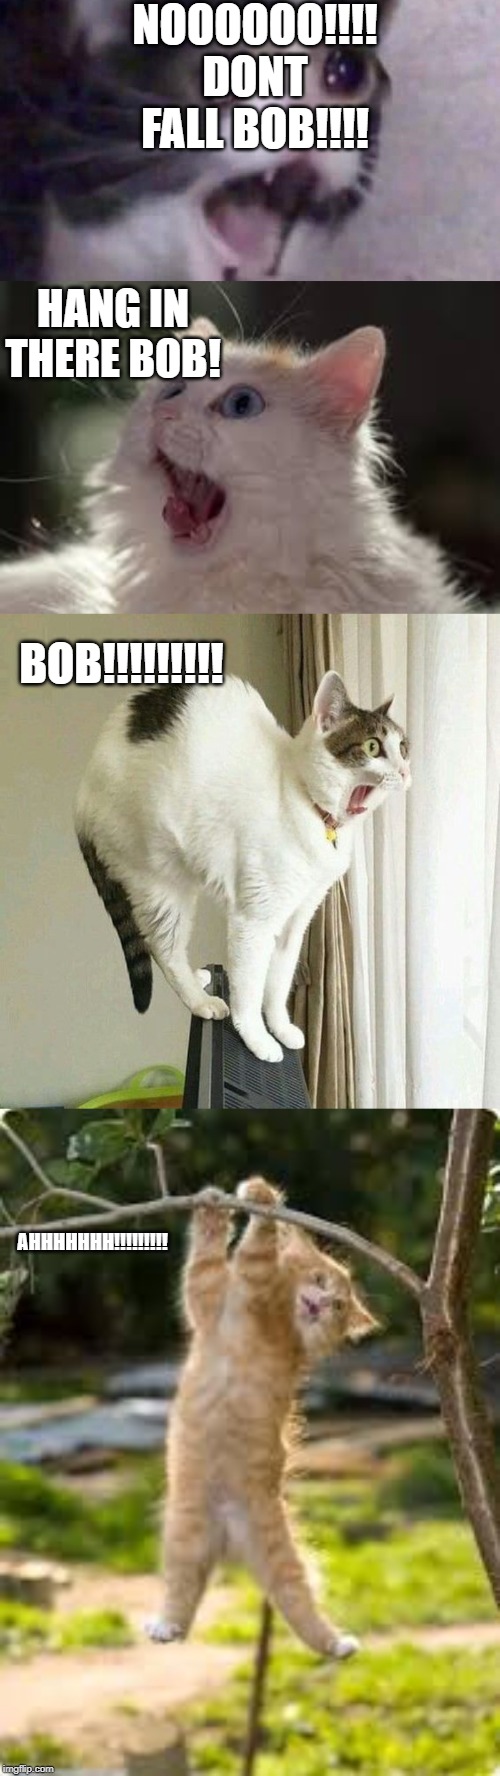 NOOOOOO!!!! DONT FALL BOB!!!! HANG IN THERE BOB! BOB!!!!!!!!! AHHHHHHH!!!!!!!!! | image tagged in cats,funny meme | made w/ Imgflip meme maker